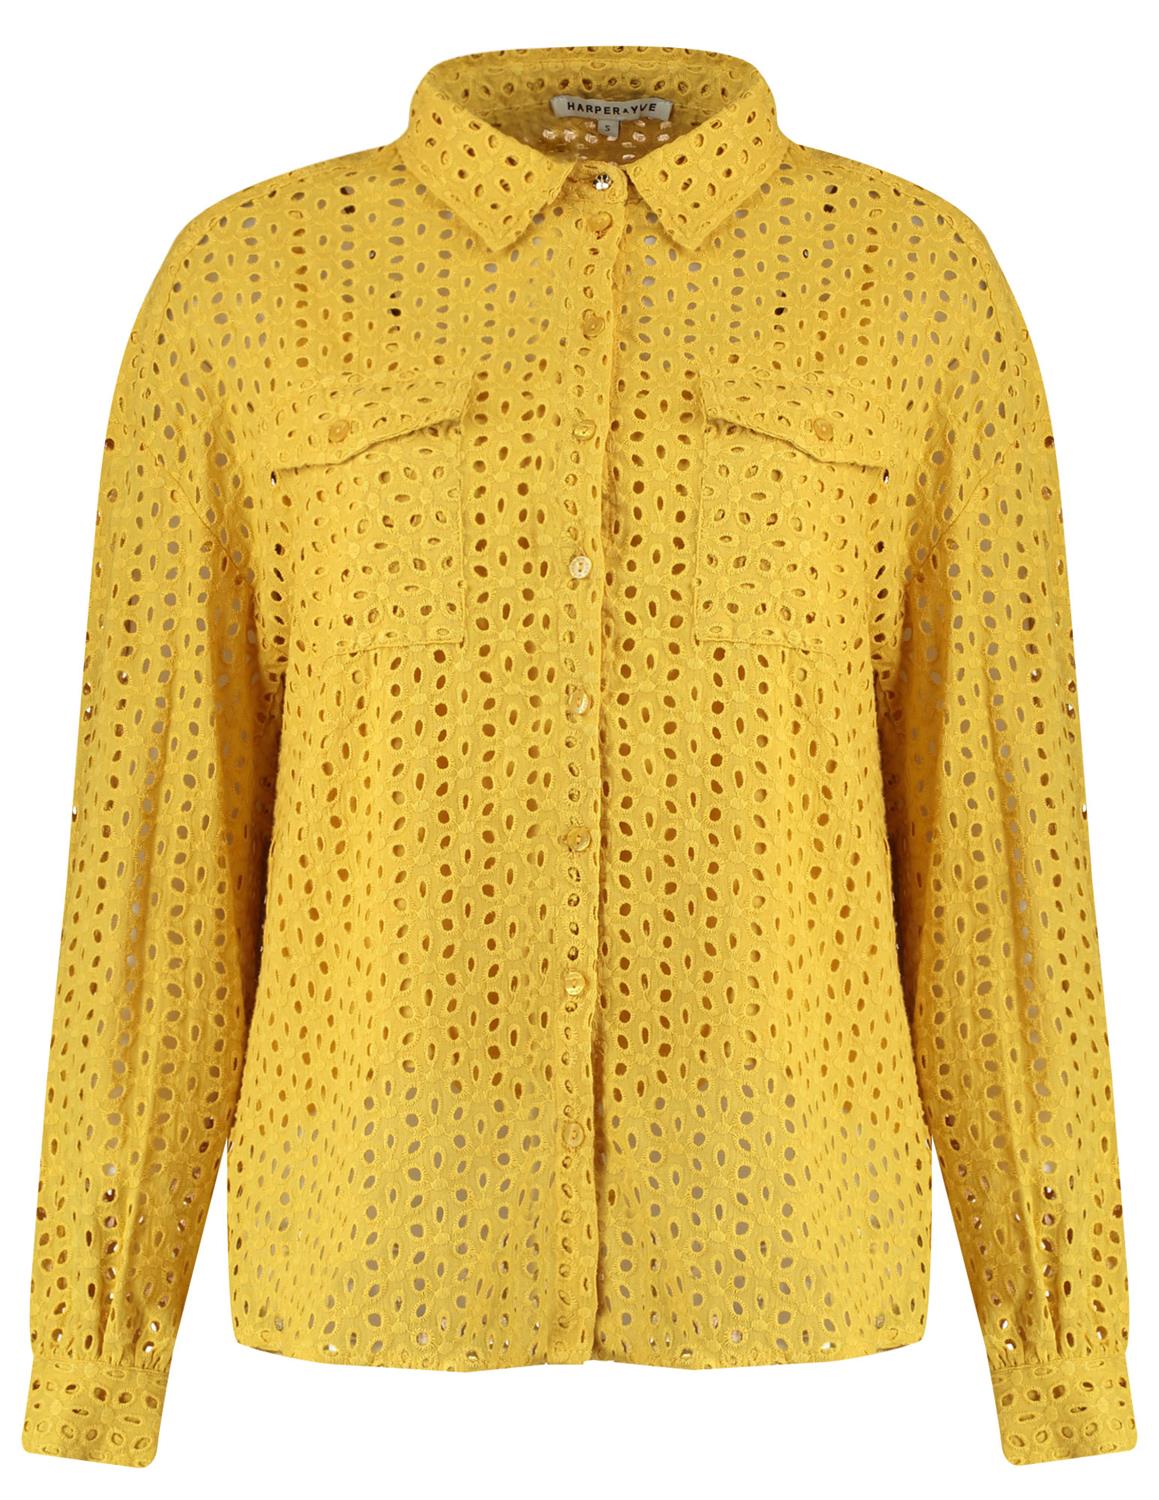 Gele dames blouse - Harper & Yve - 100 yellow